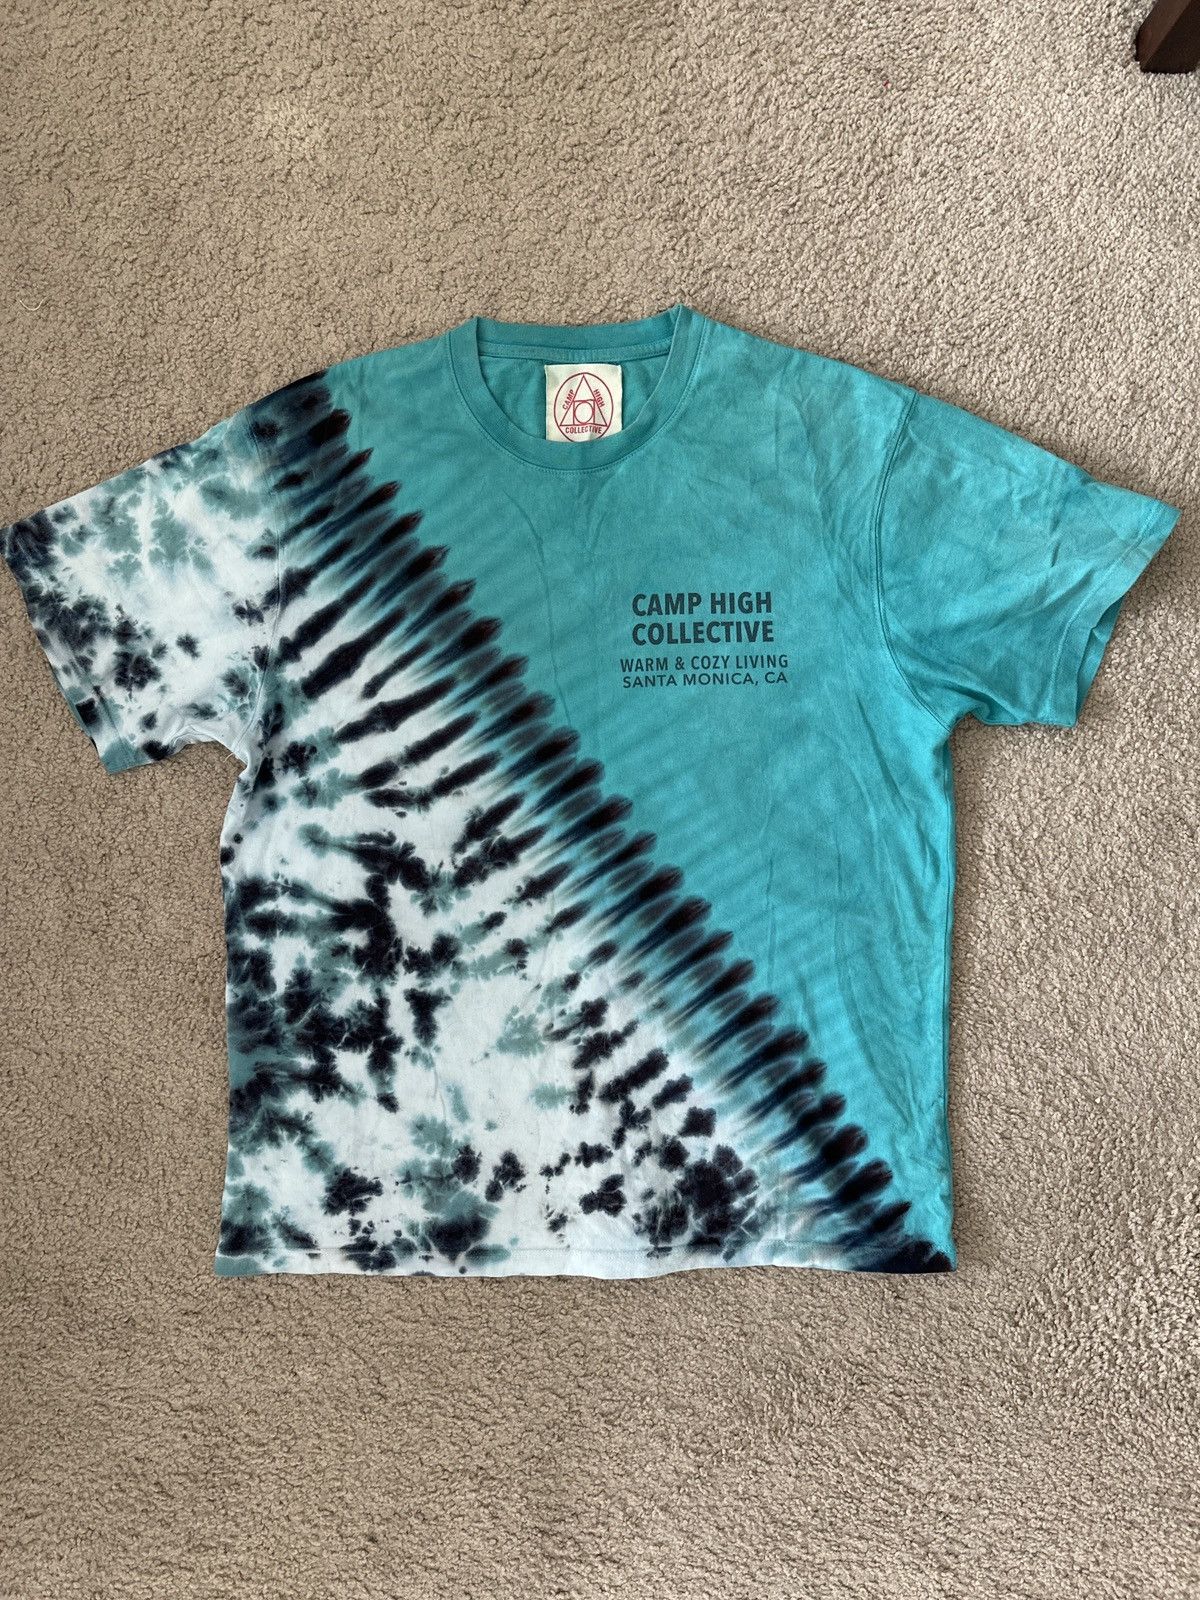 Camp High Camp High Tie Dye Teal Shirt Size US L / EU 52-54 / 3 - 1 Preview